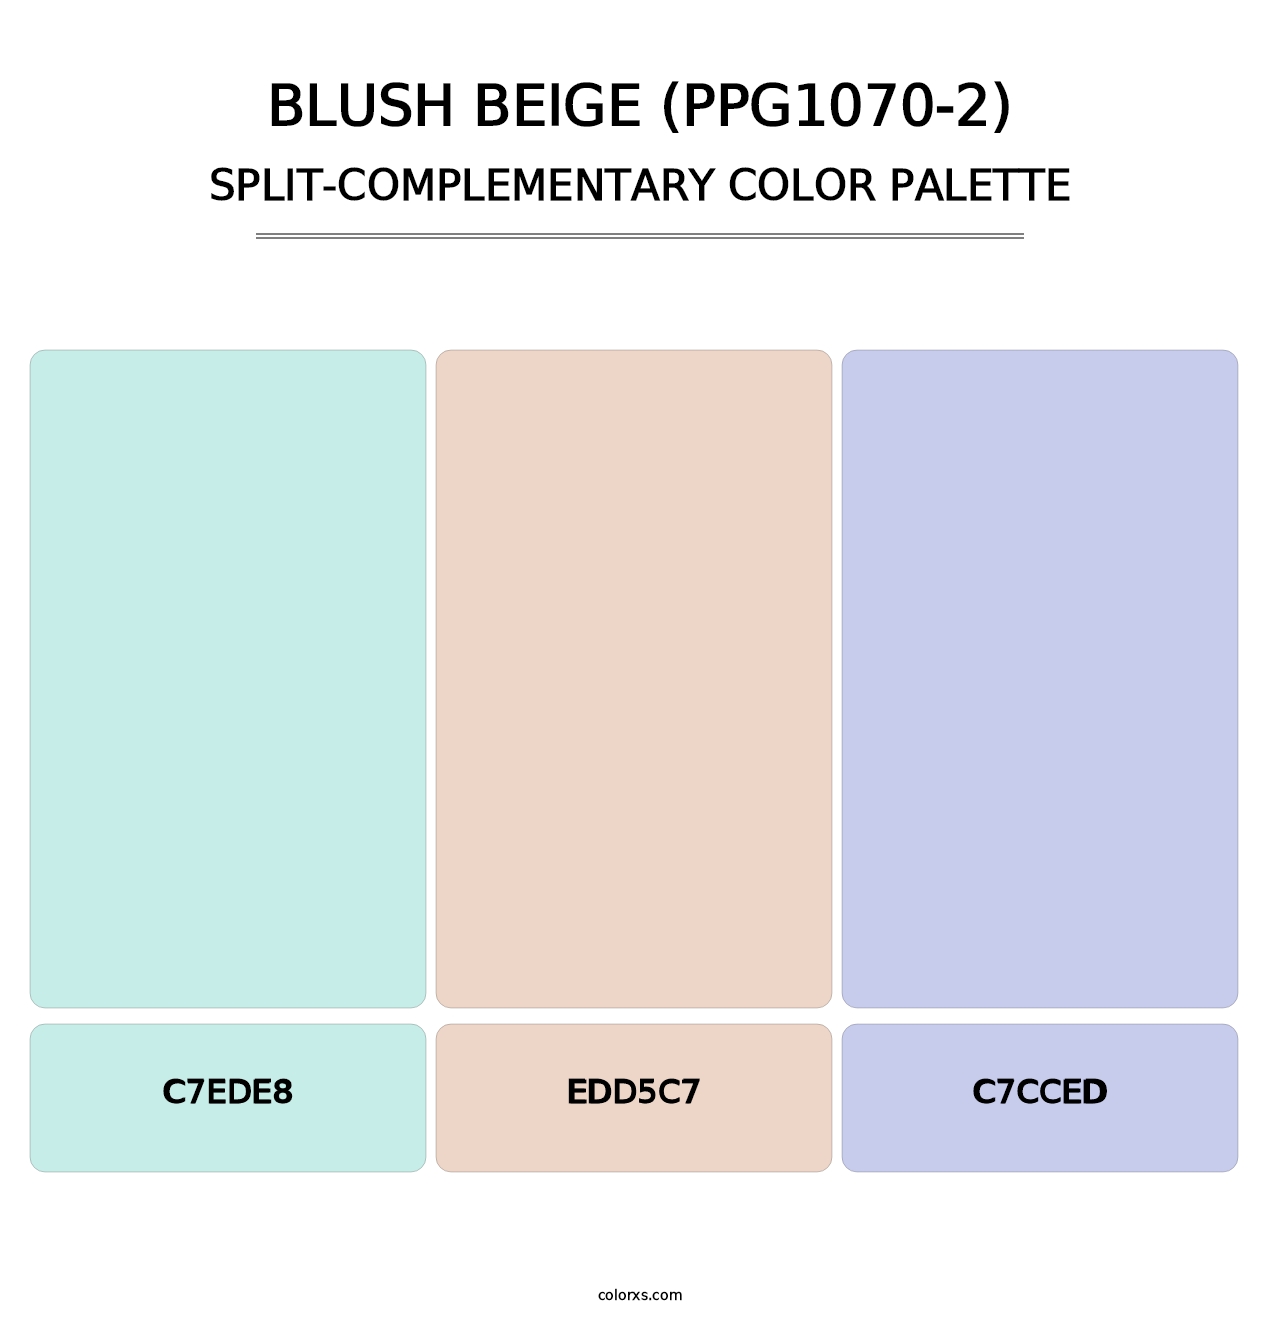 Blush Beige (PPG1070-2) - Split-Complementary Color Palette